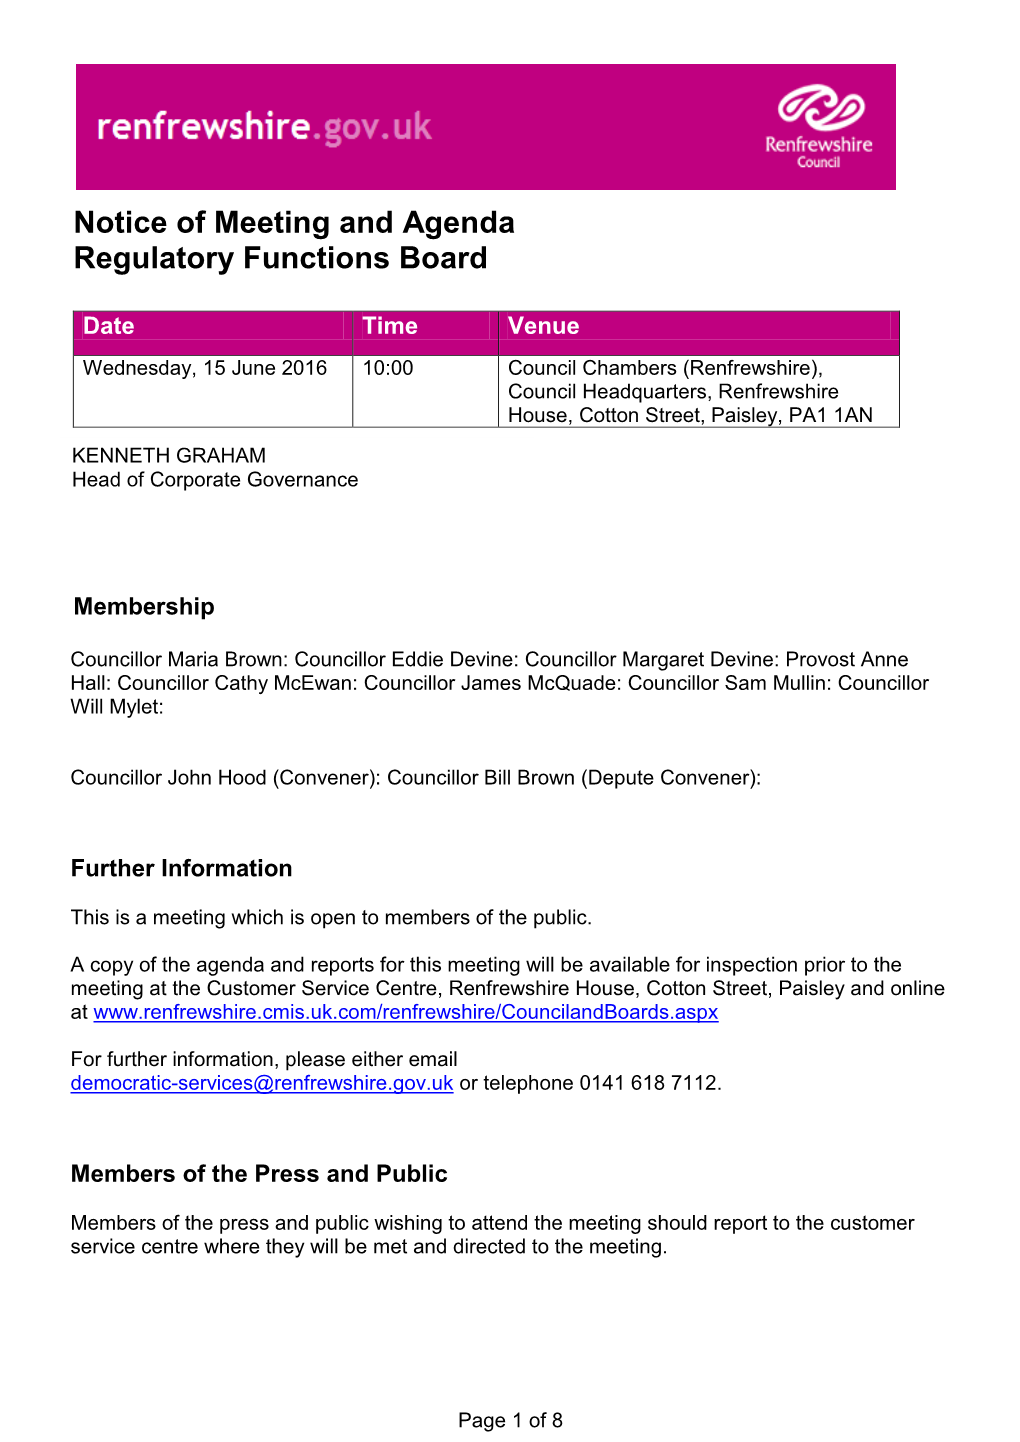 Notice of Meeting and Agenda Regulatory Functions Board